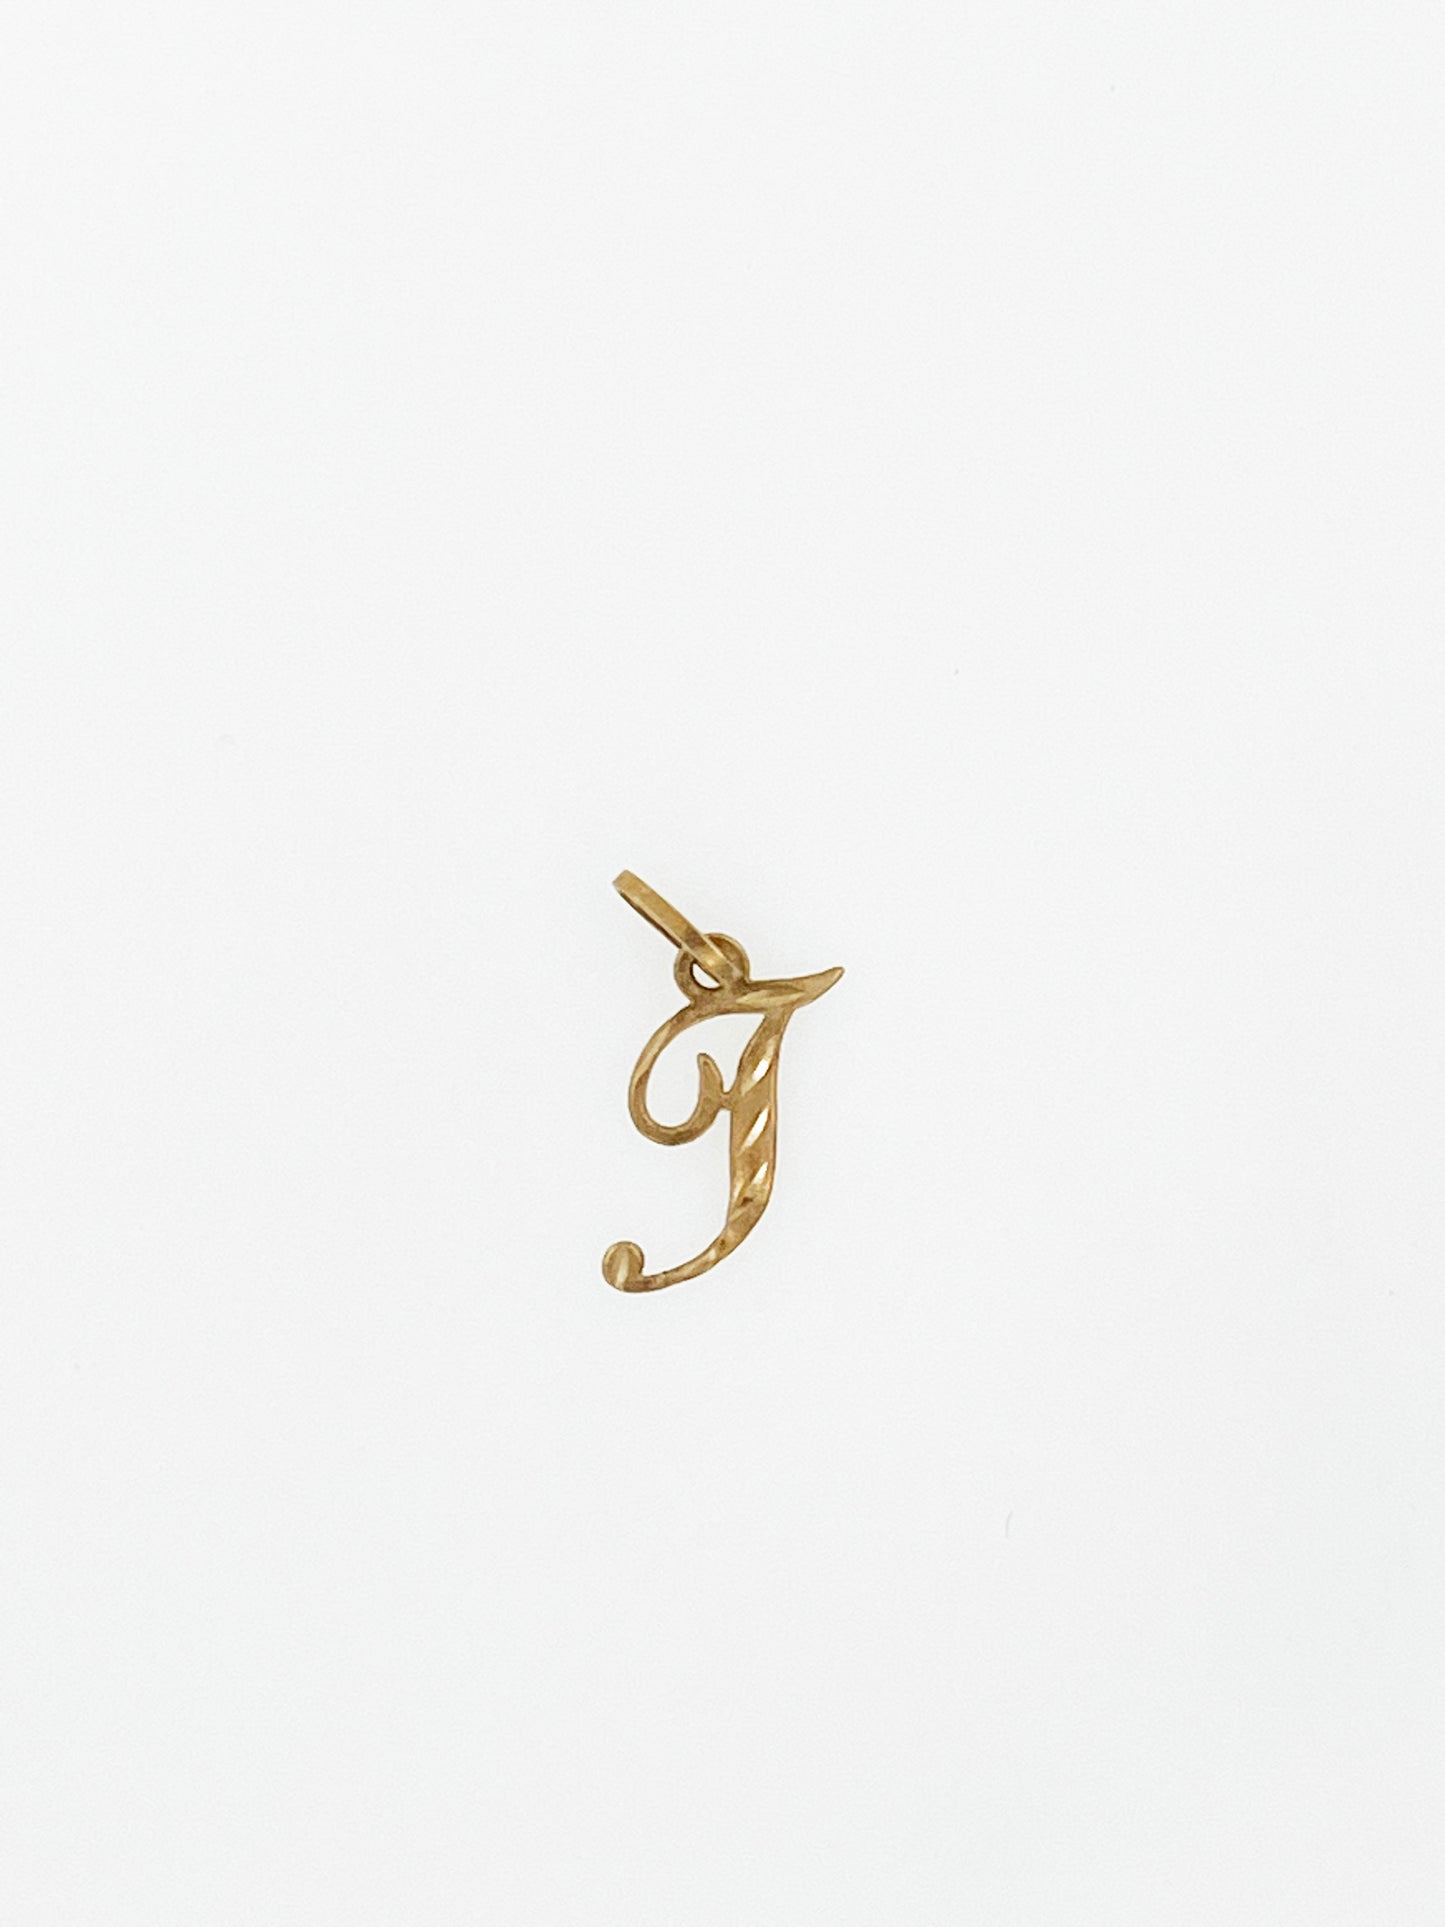 Dainty Diamond Cut ‘J’ Initial Pendant in 14k Yellow Gold